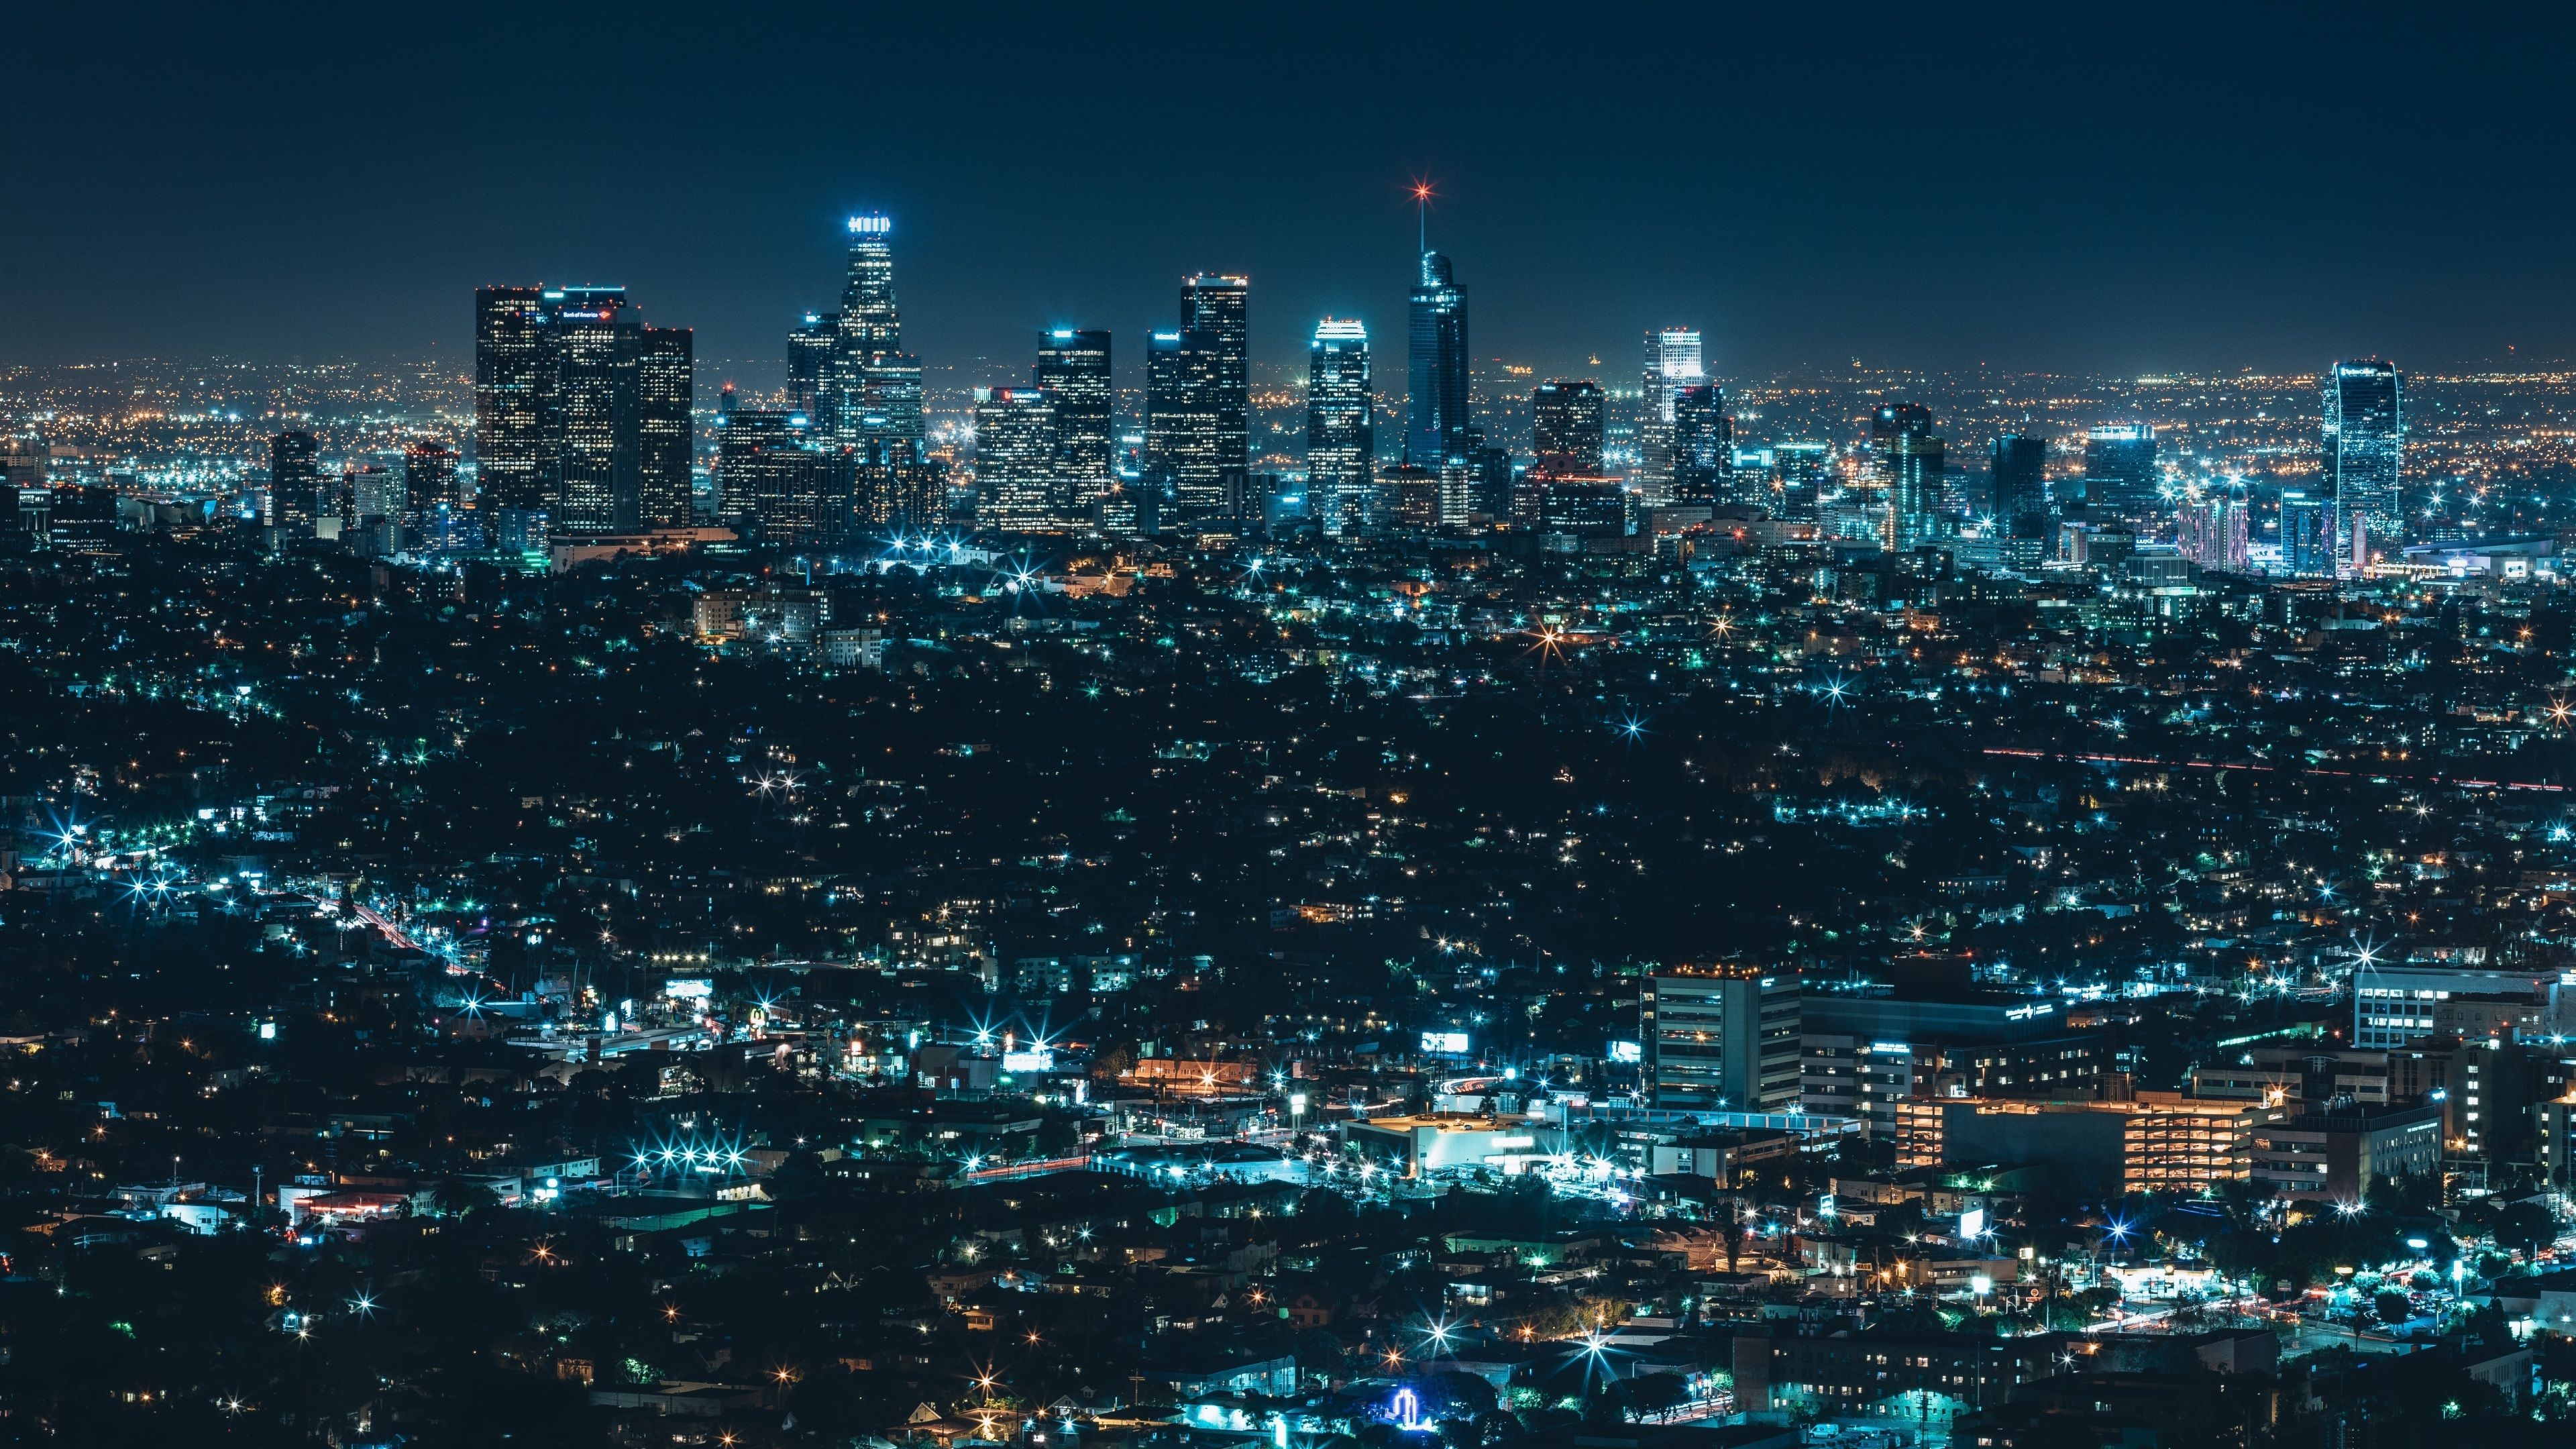 A city skyline at night with lights - Night